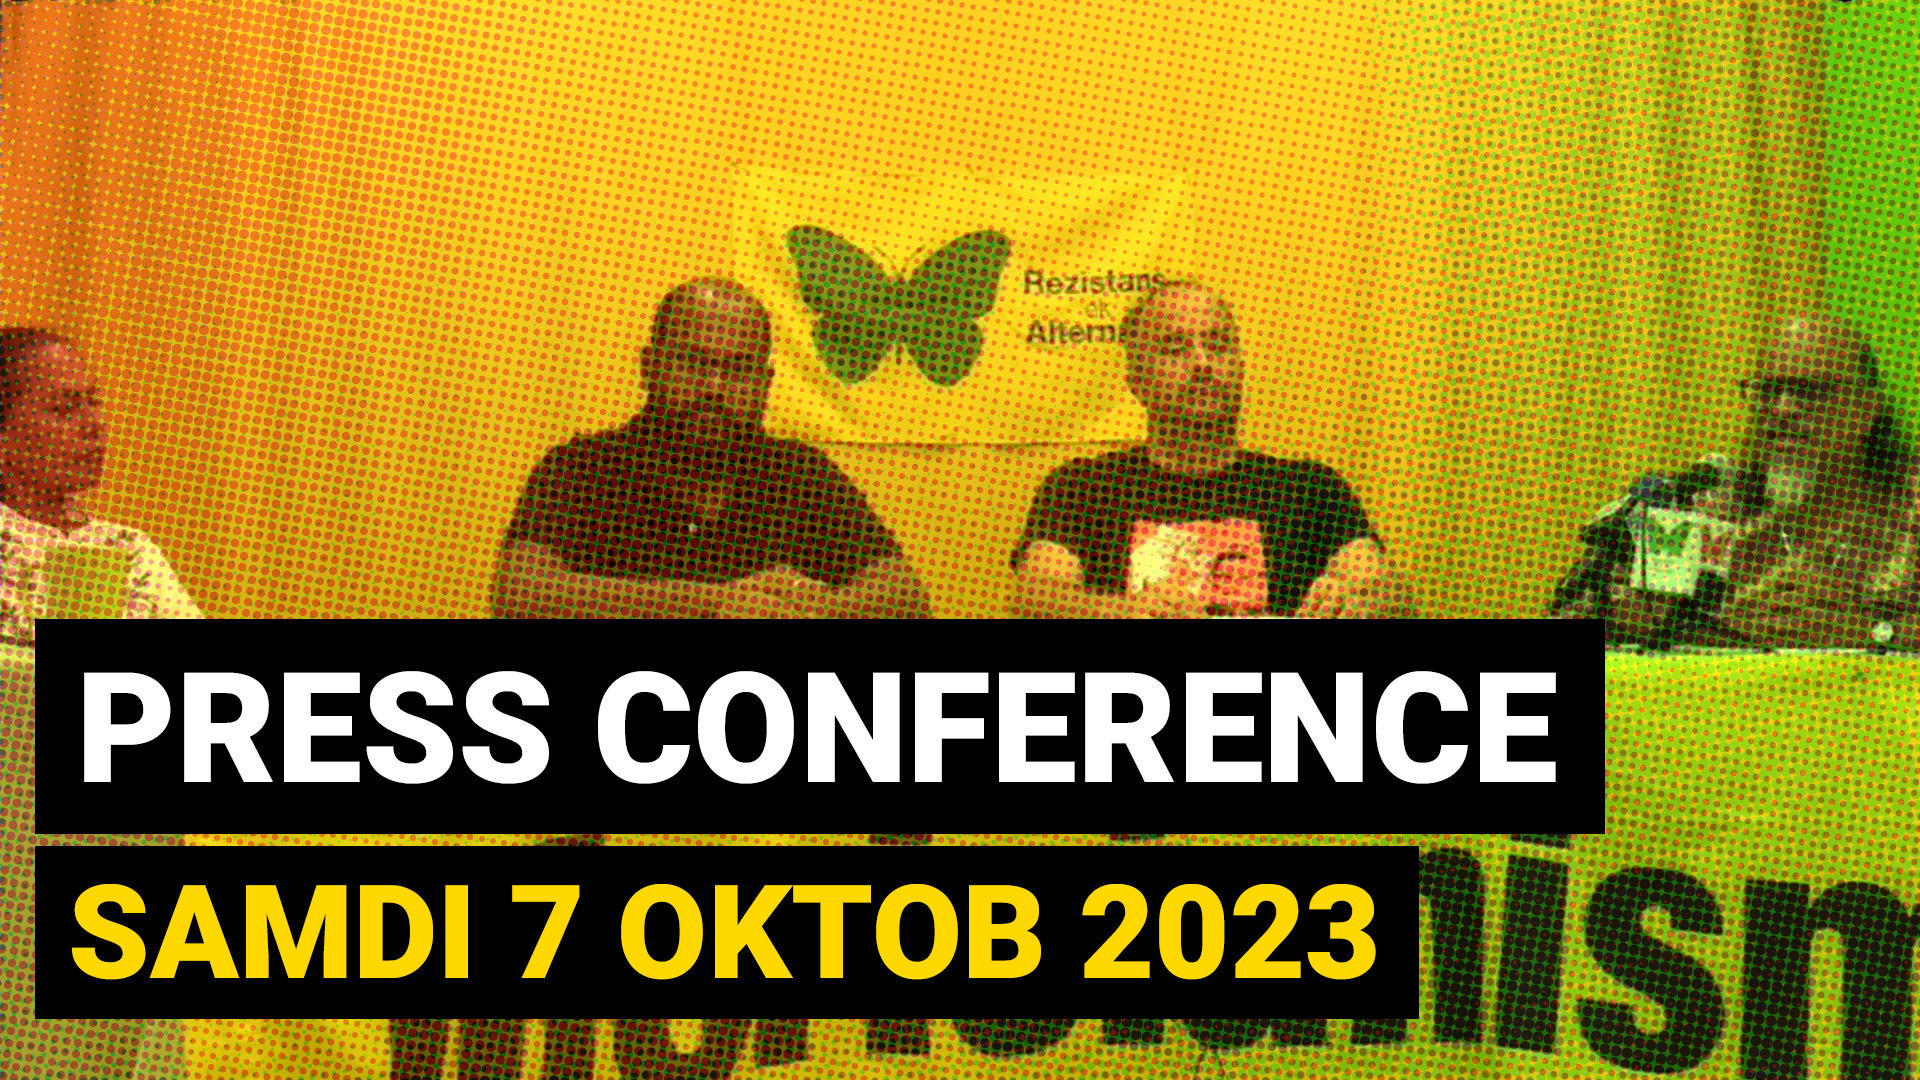 Press conference of Rezistans ek Alternativ.